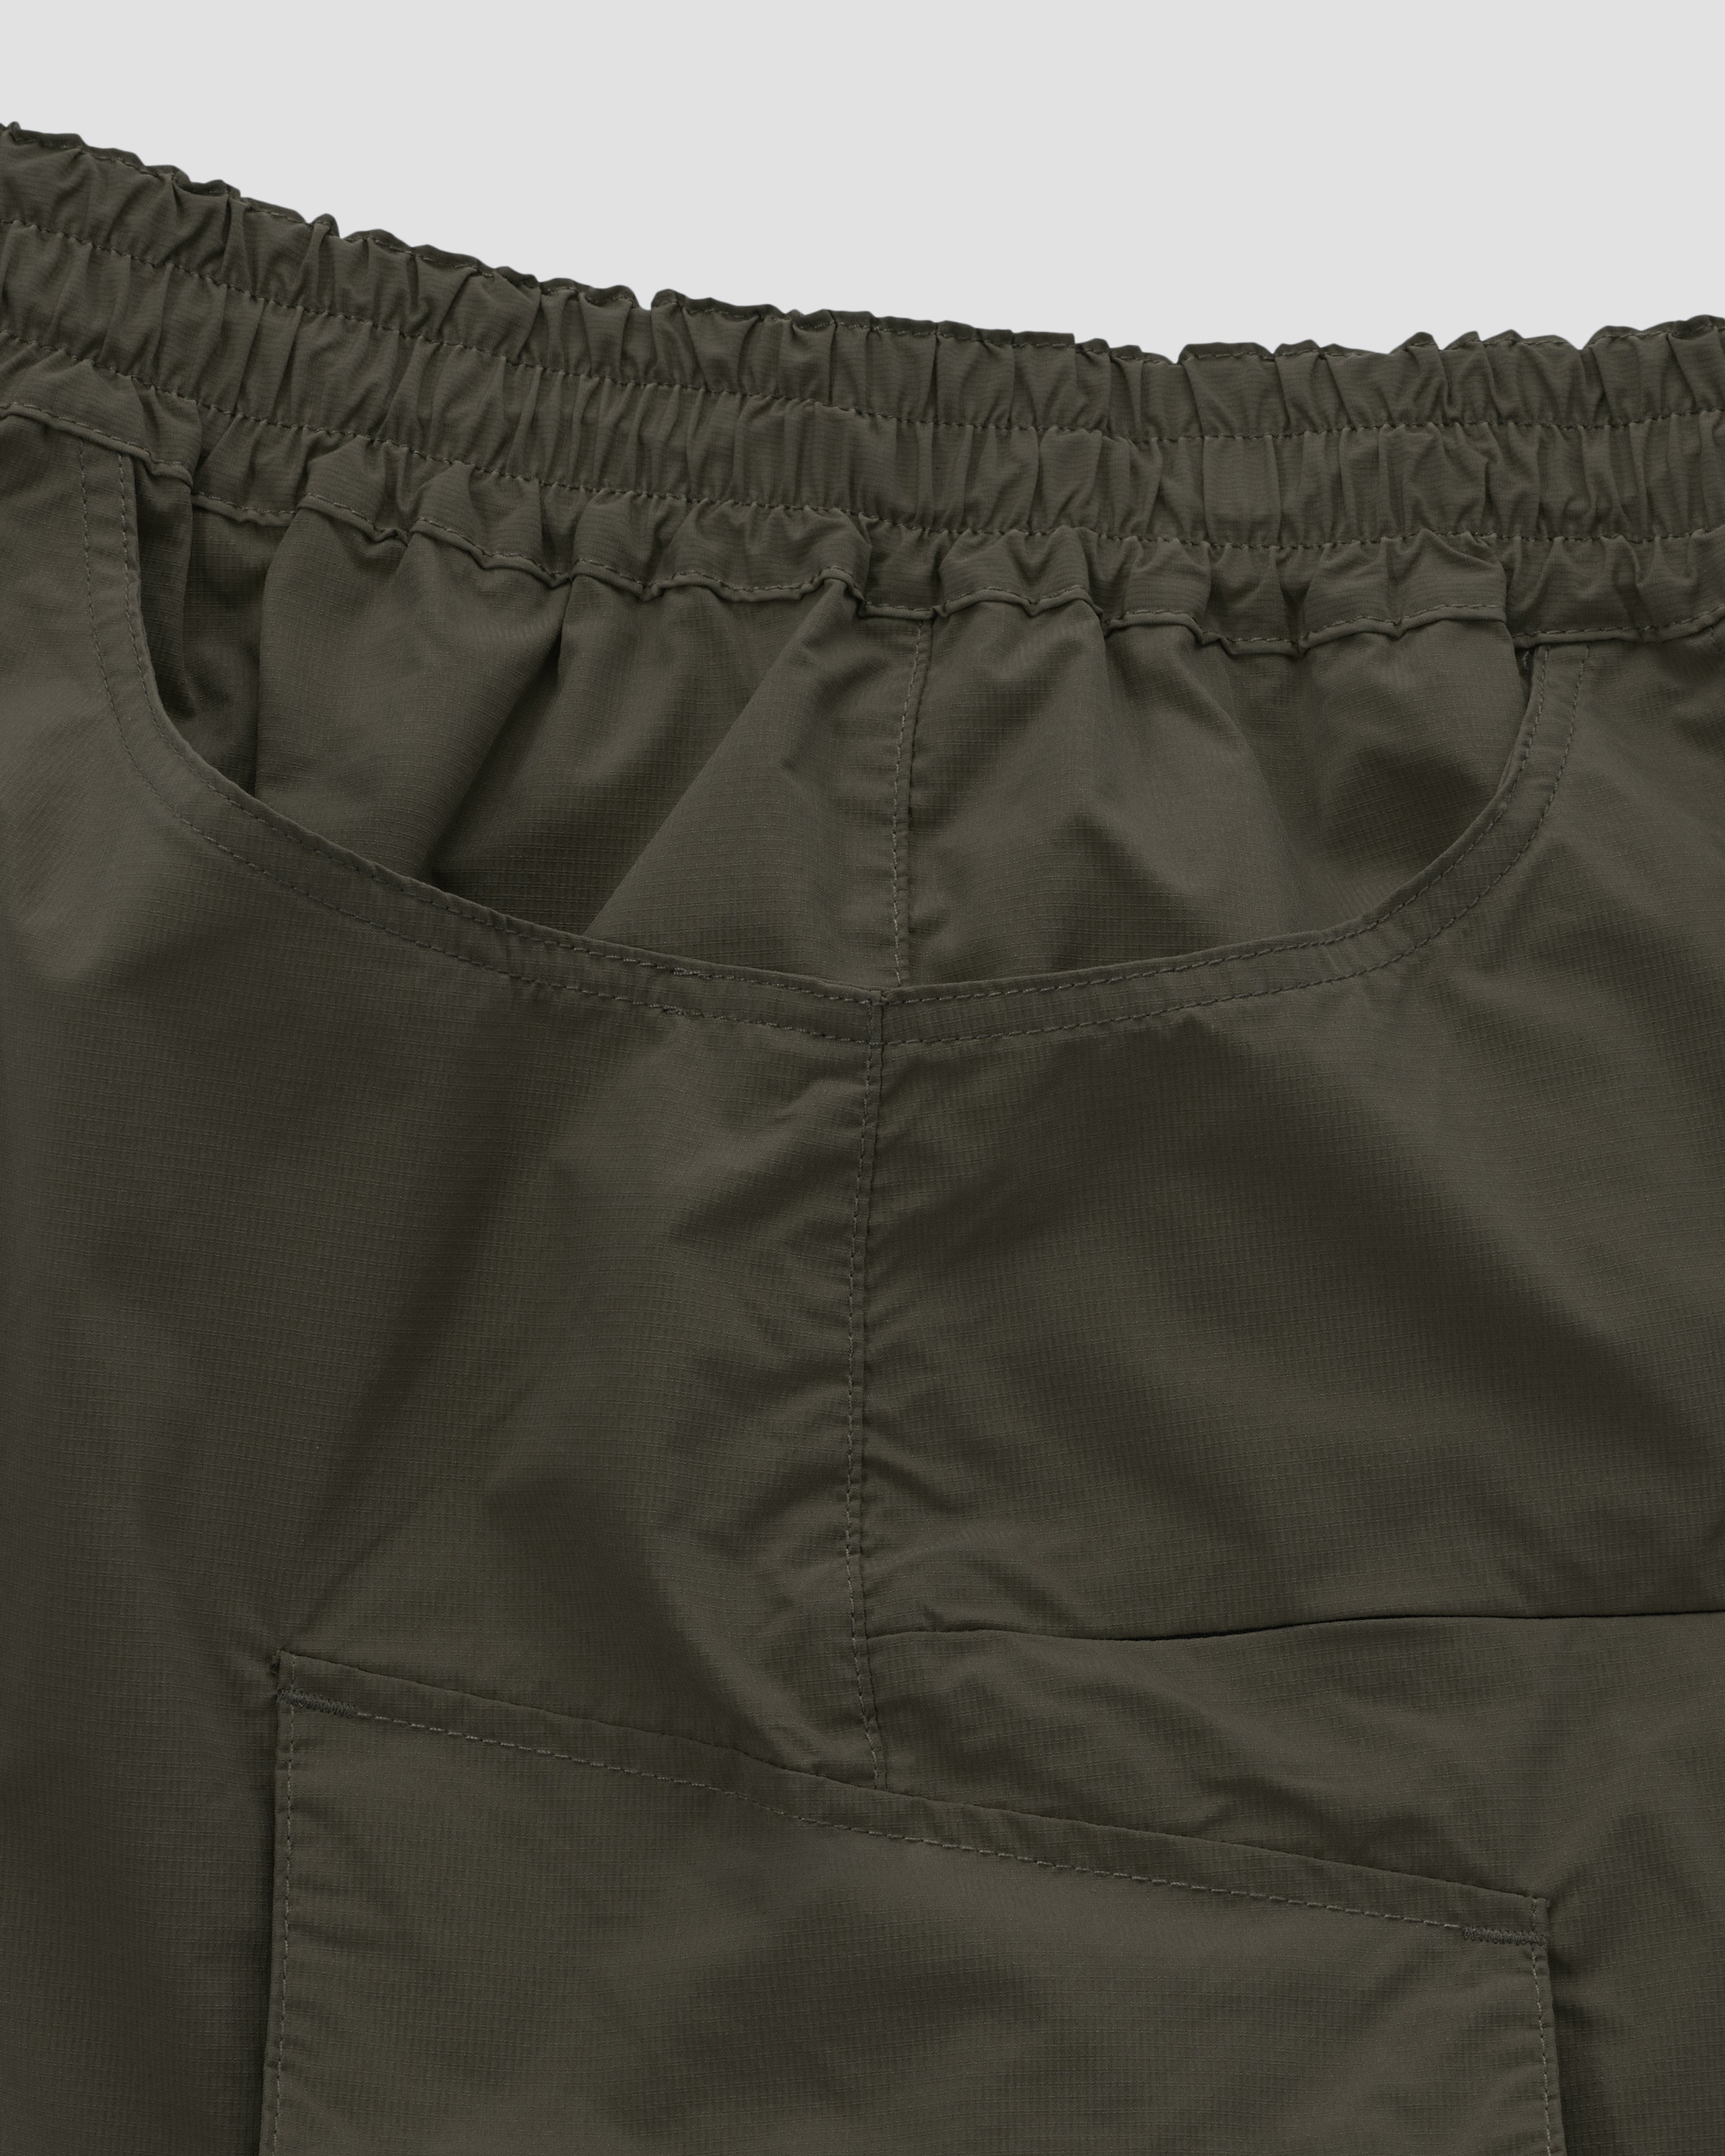 Field Shorts - Army Green